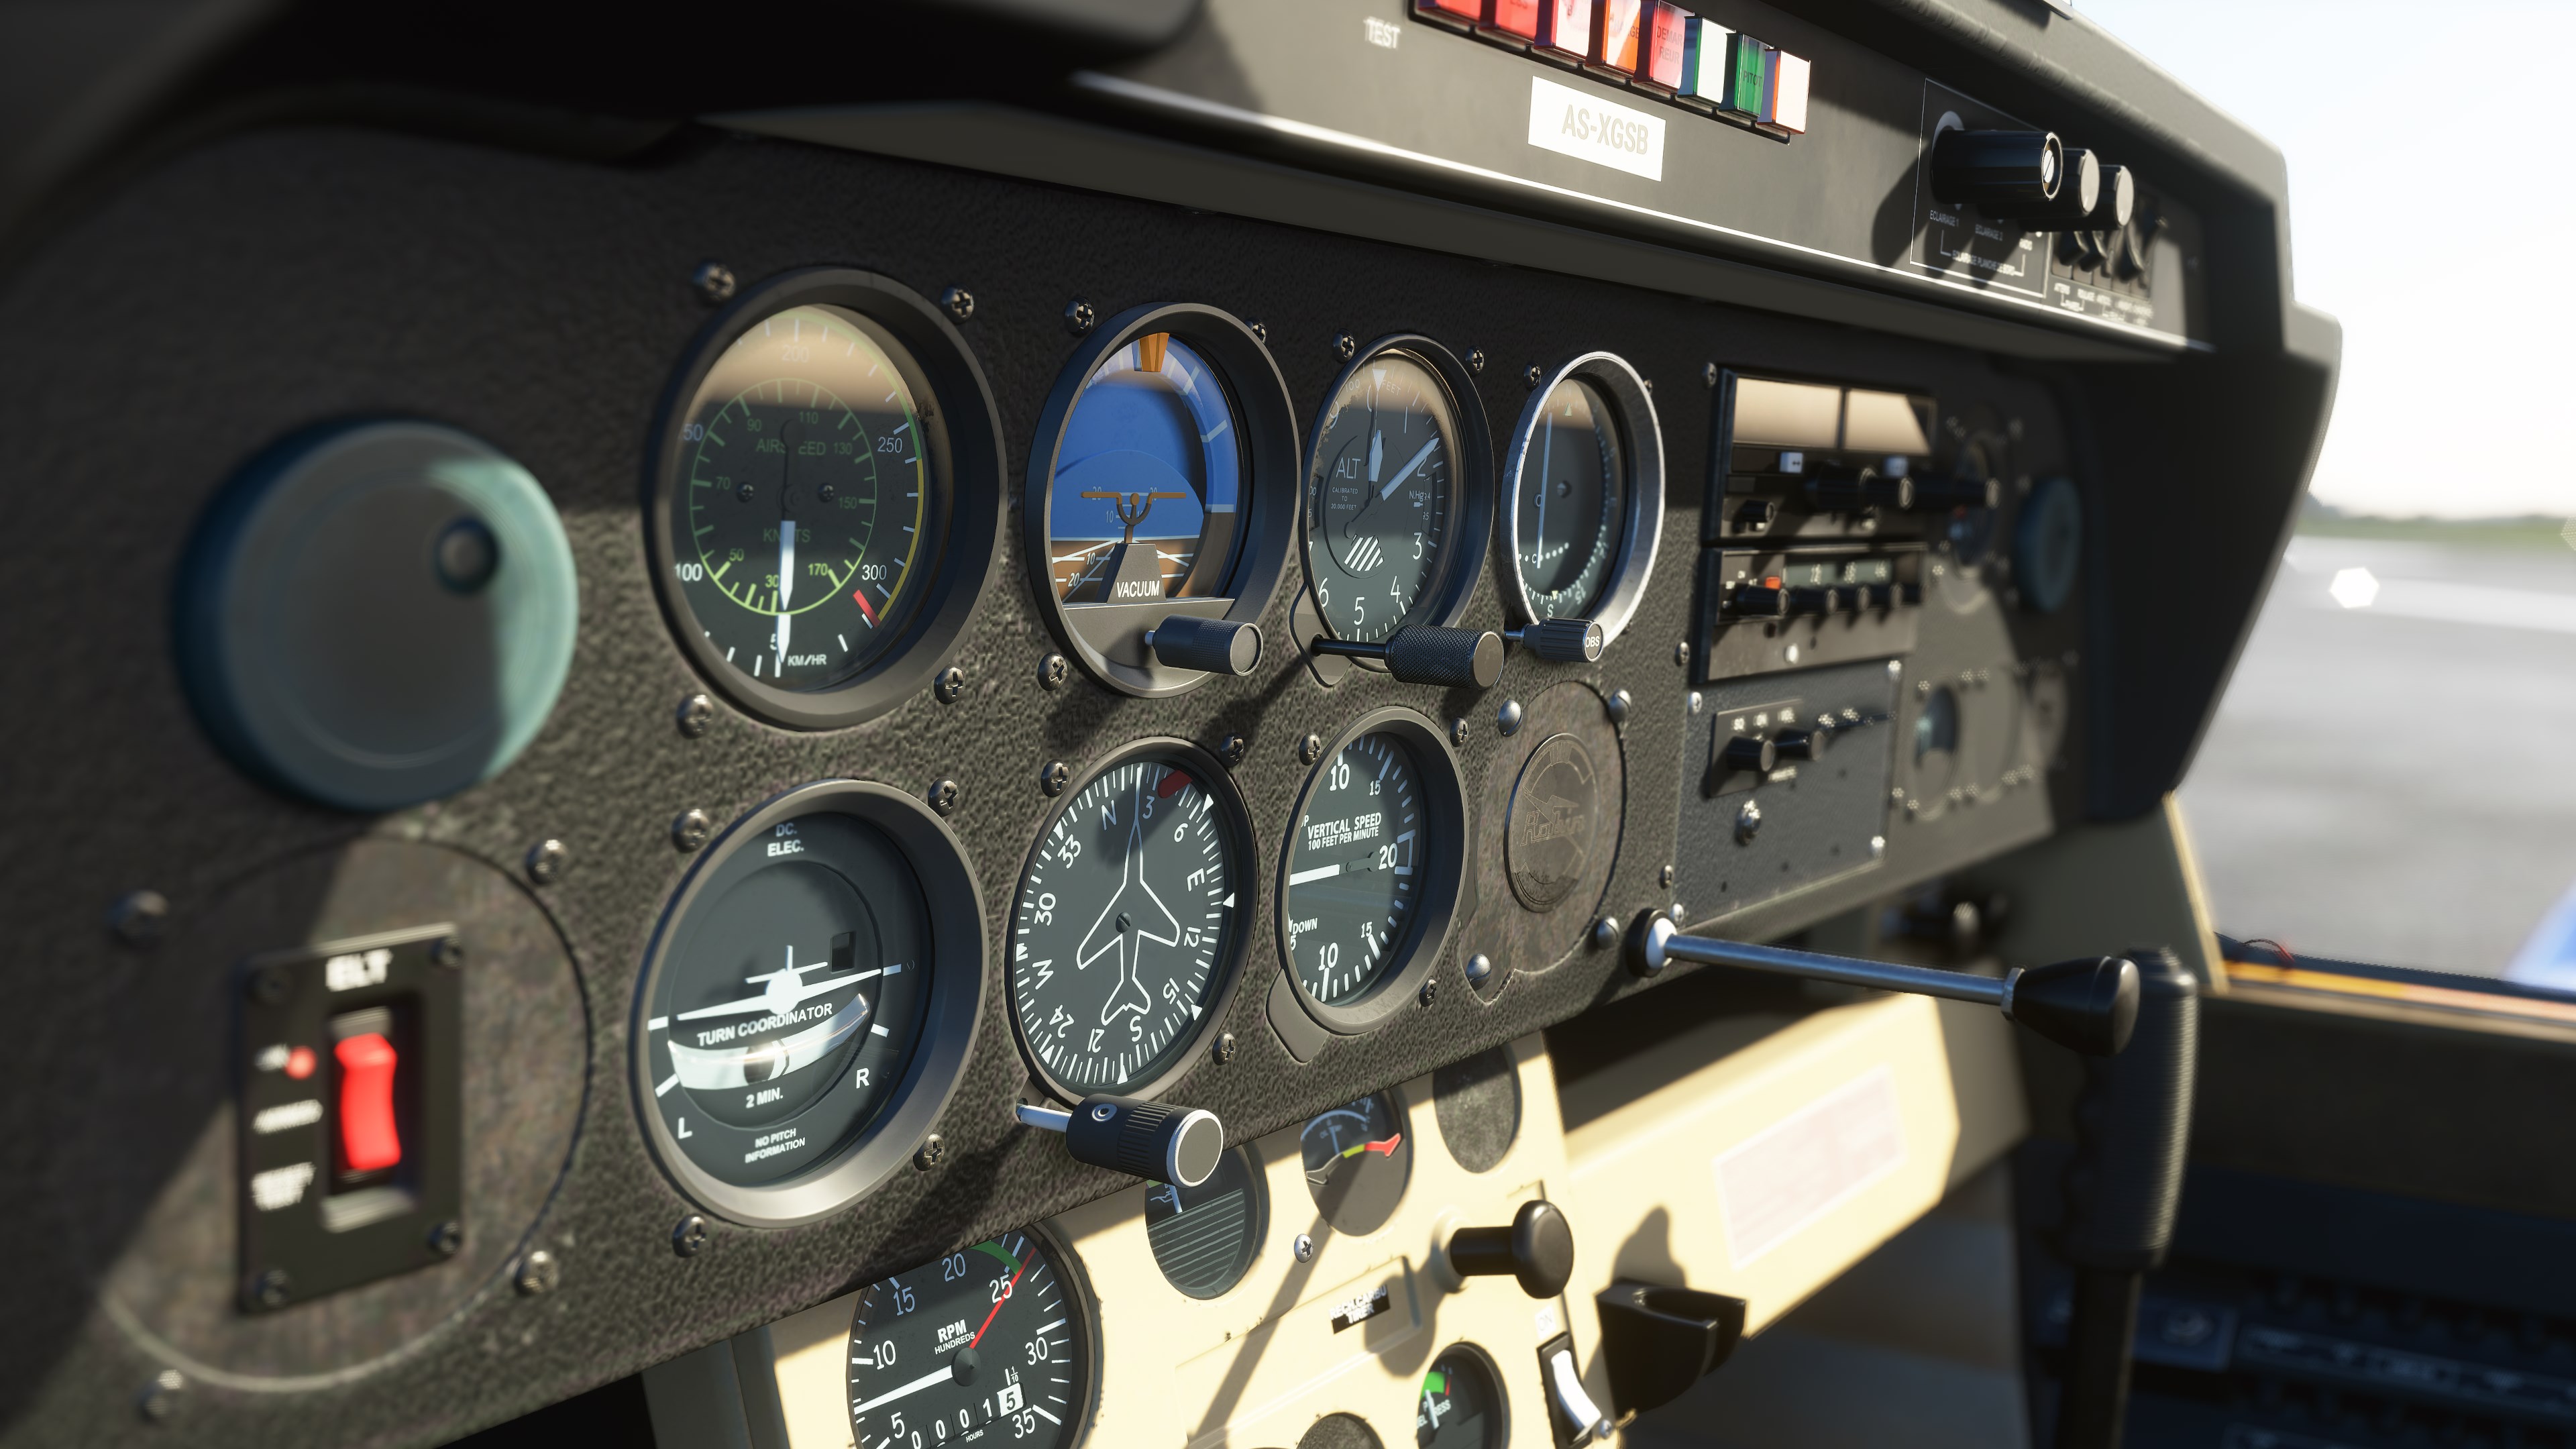 Mfs 2020 купить. Microsoft Flight Simulator (2020). Microsoft Flight SIM 2020. Microsoft Flight Simulator Premium Deluxe. Cessna 152 Cockpit.